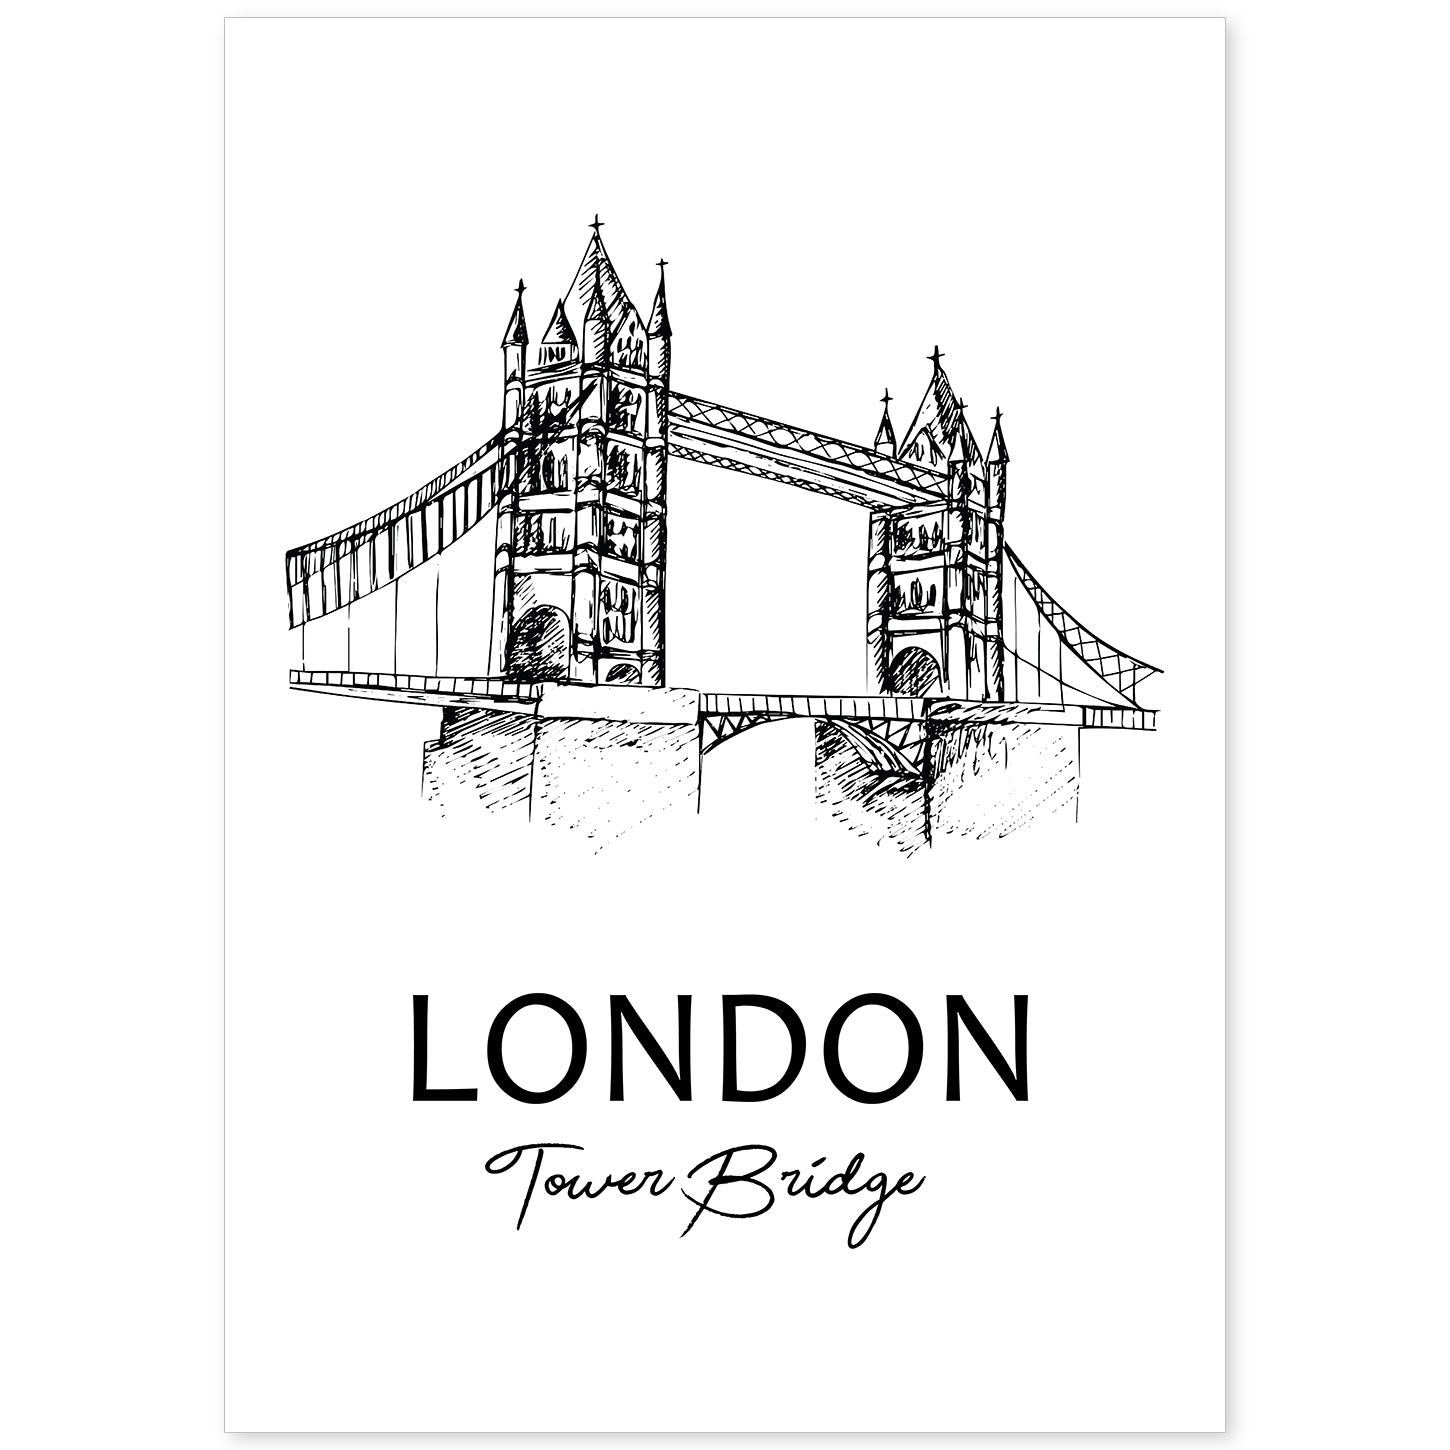 Poster de Londres - Tower bridge. Láminas con monumentos de ciudades.-Artwork-Nacnic-A4-Sin marco-Nacnic Estudio SL